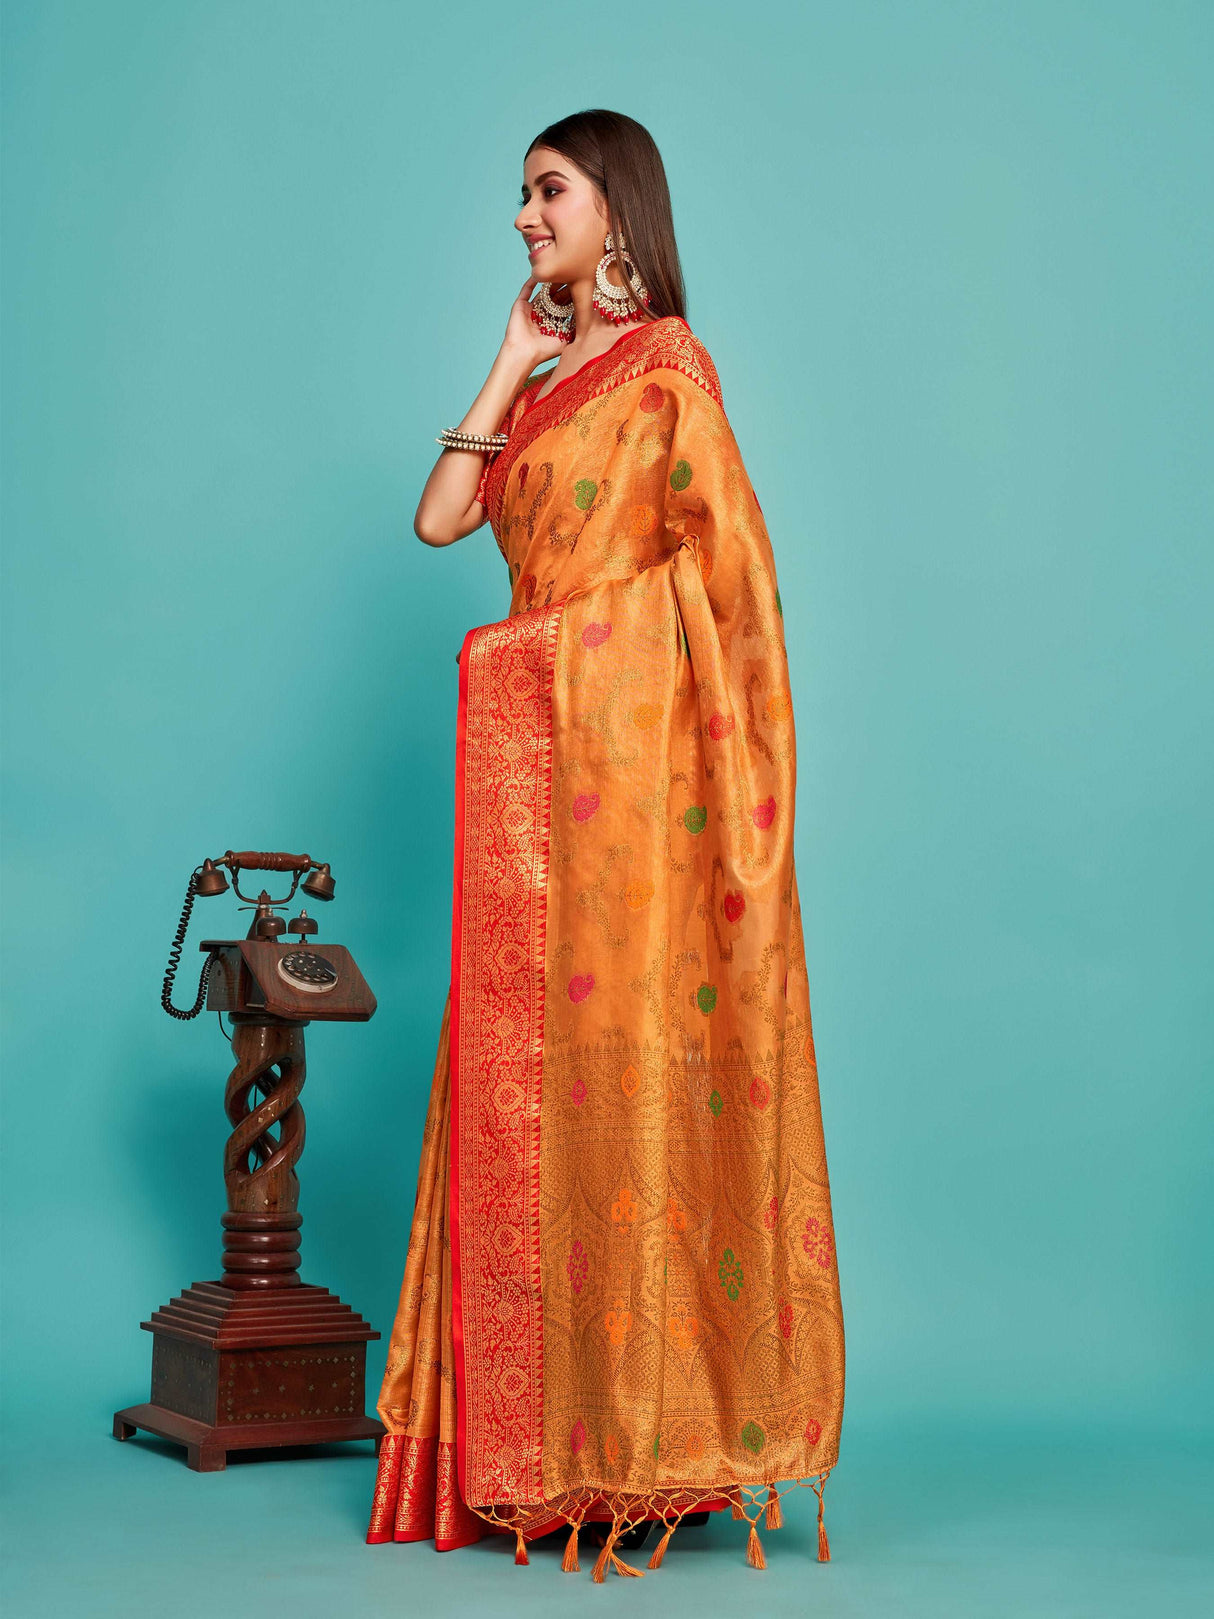 Banarasi Woven Art Silk Saree in Peach With Embroidery Blouse